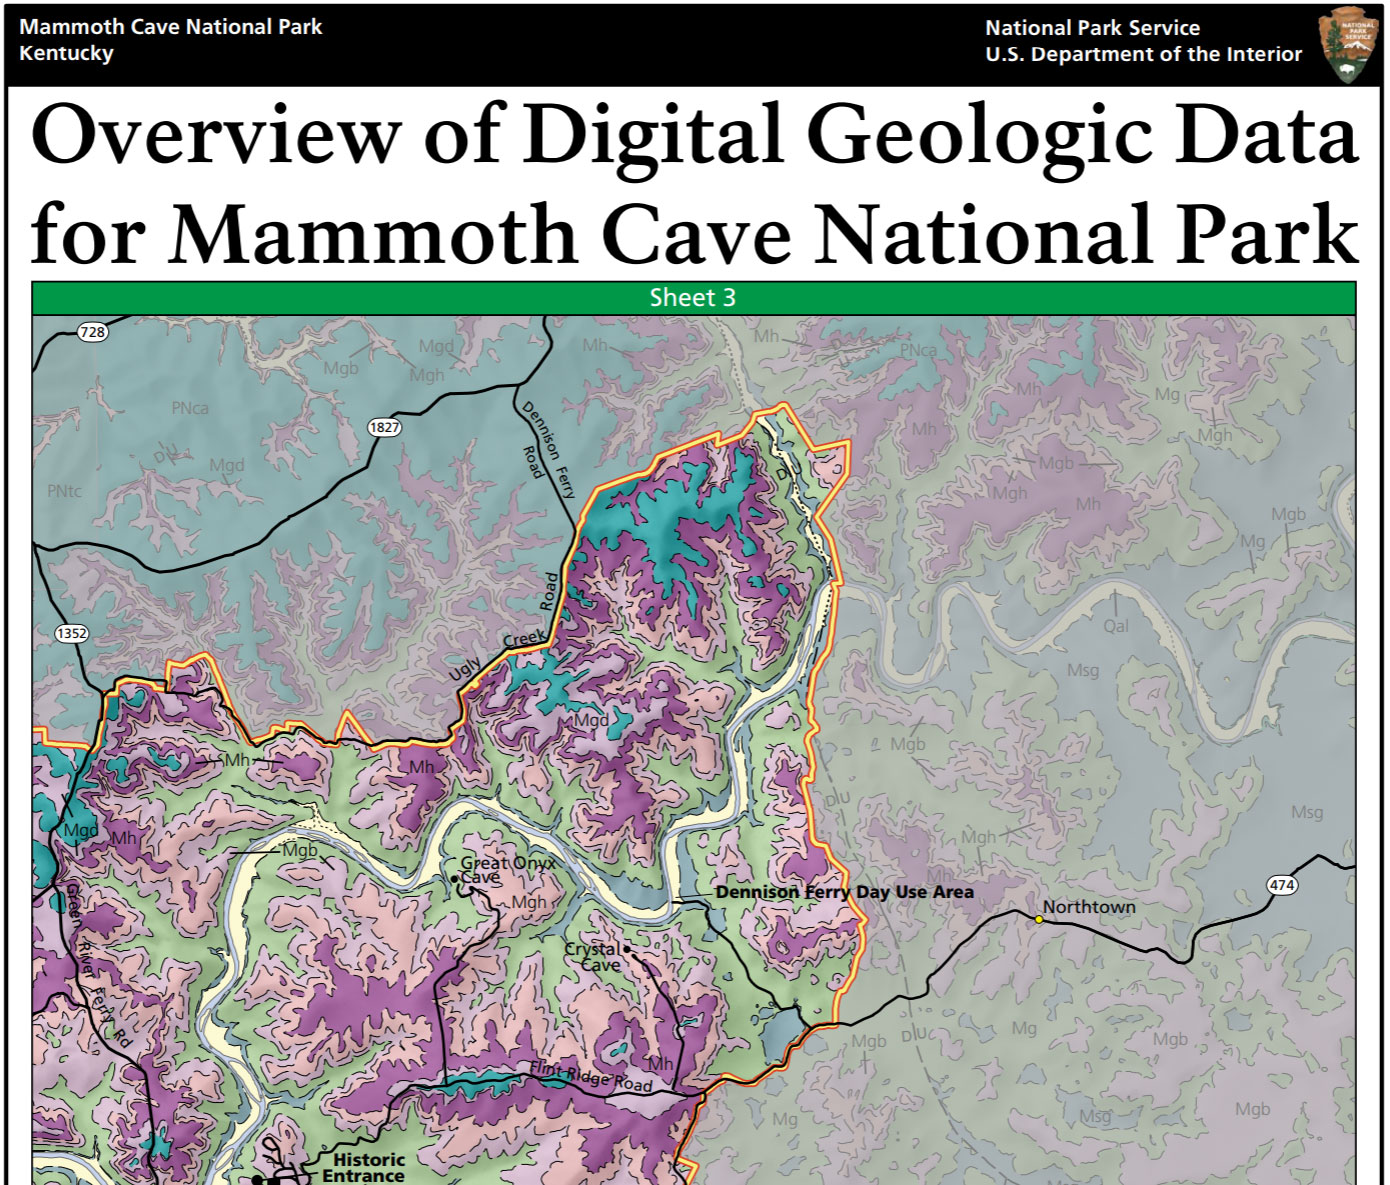 caves in kentucky map Nps Geodiversity Atlas Mammoth Cave National Park Kentucky U S caves in kentucky map